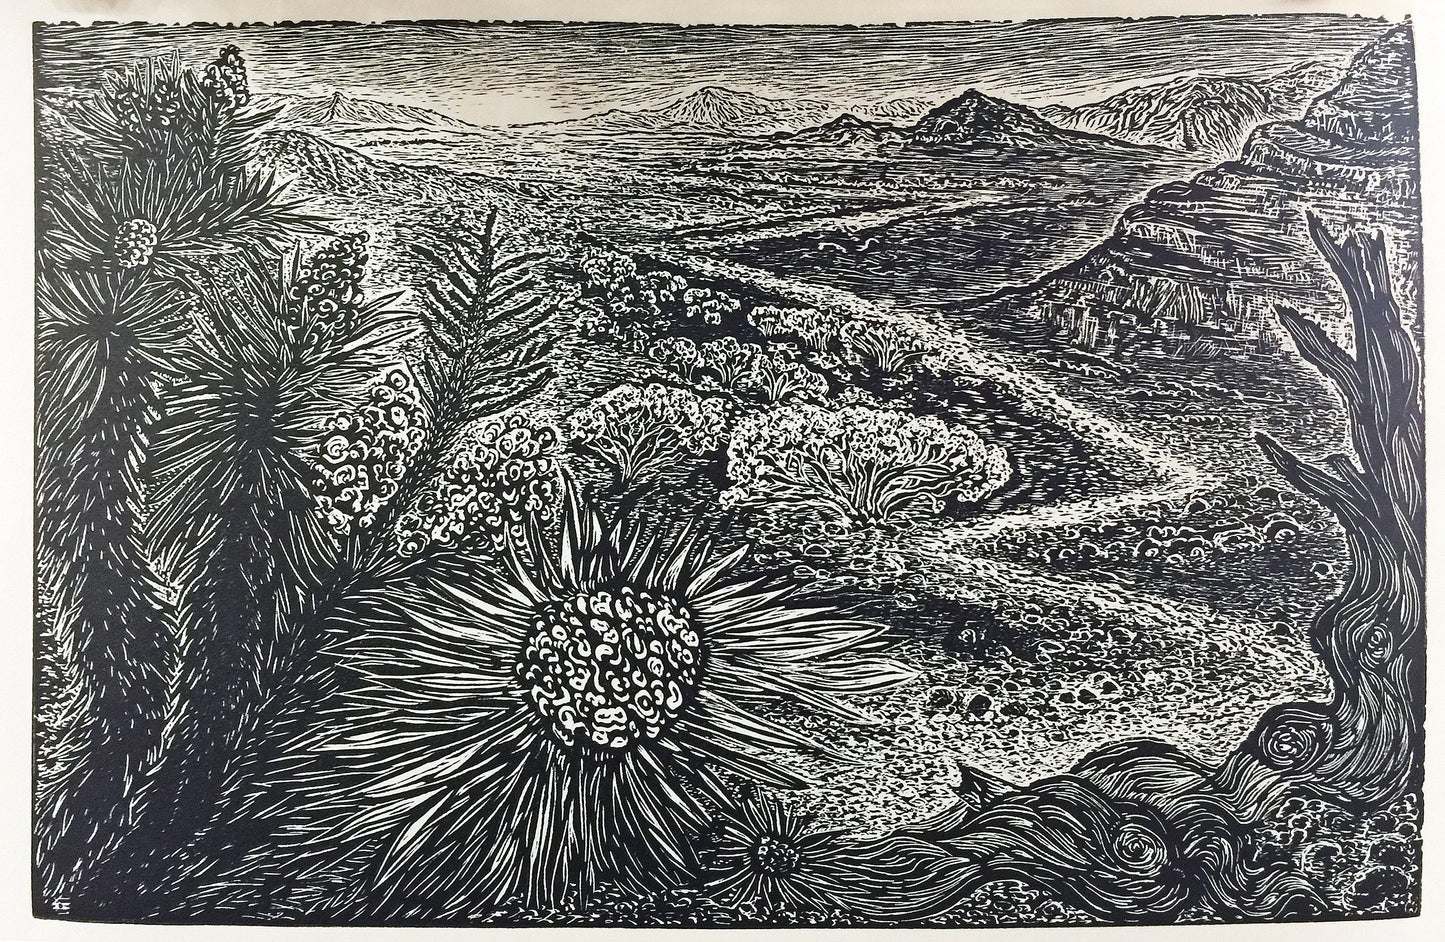 Not Too Far To Walk Original Wood Engraving Print Hiker Traveler Southwest Landscape